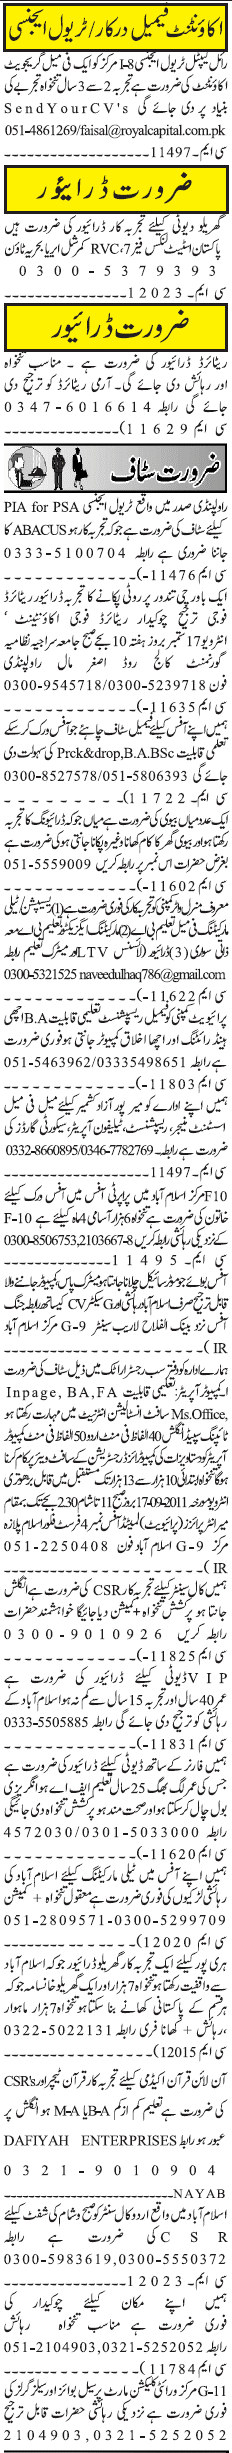 Misc. Jobs in Jang Rawalpindi Classified